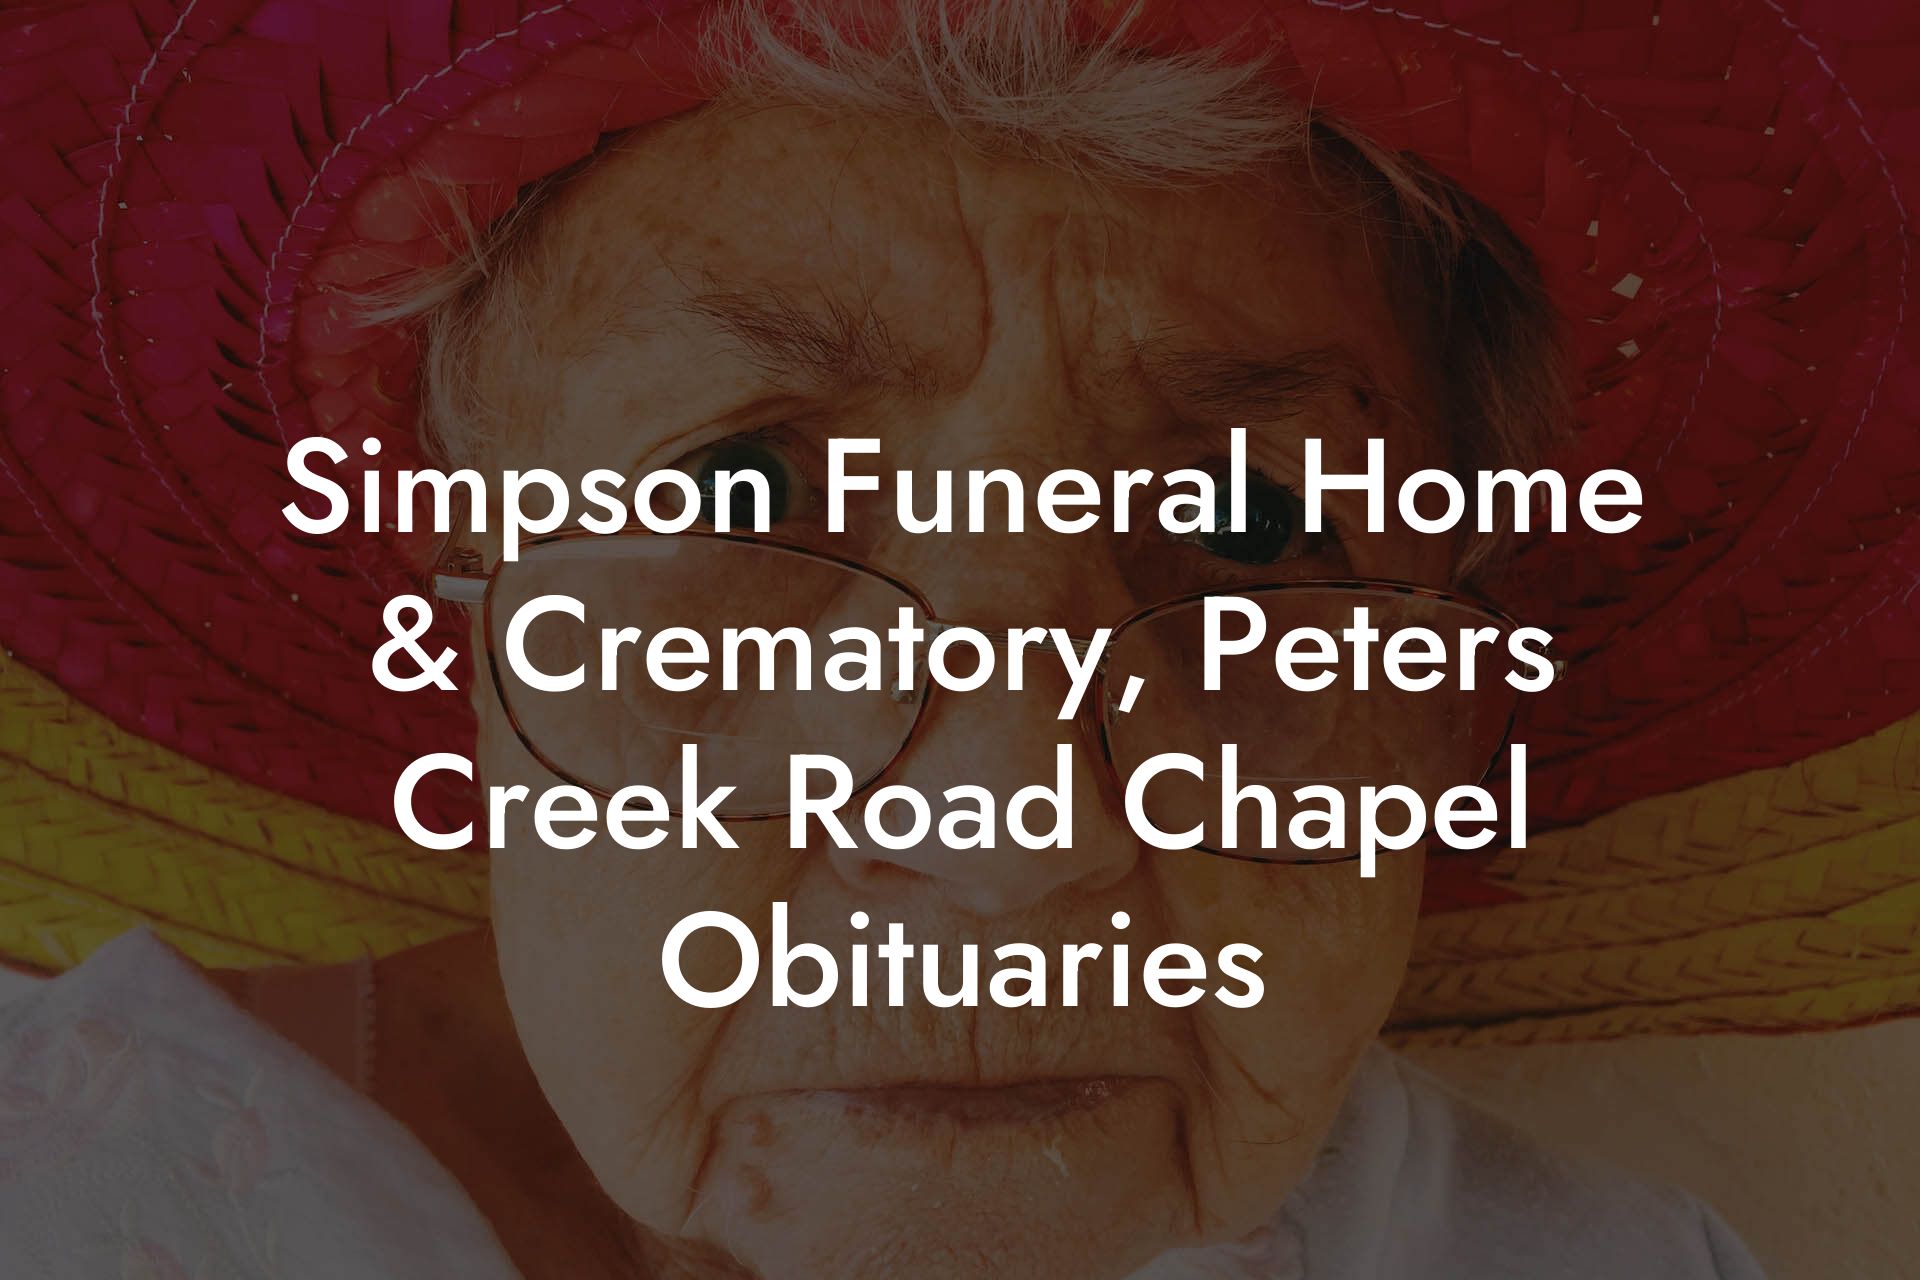 Simpson Funeral Home & Crematory, Peters Creek Road Chapel Obituaries